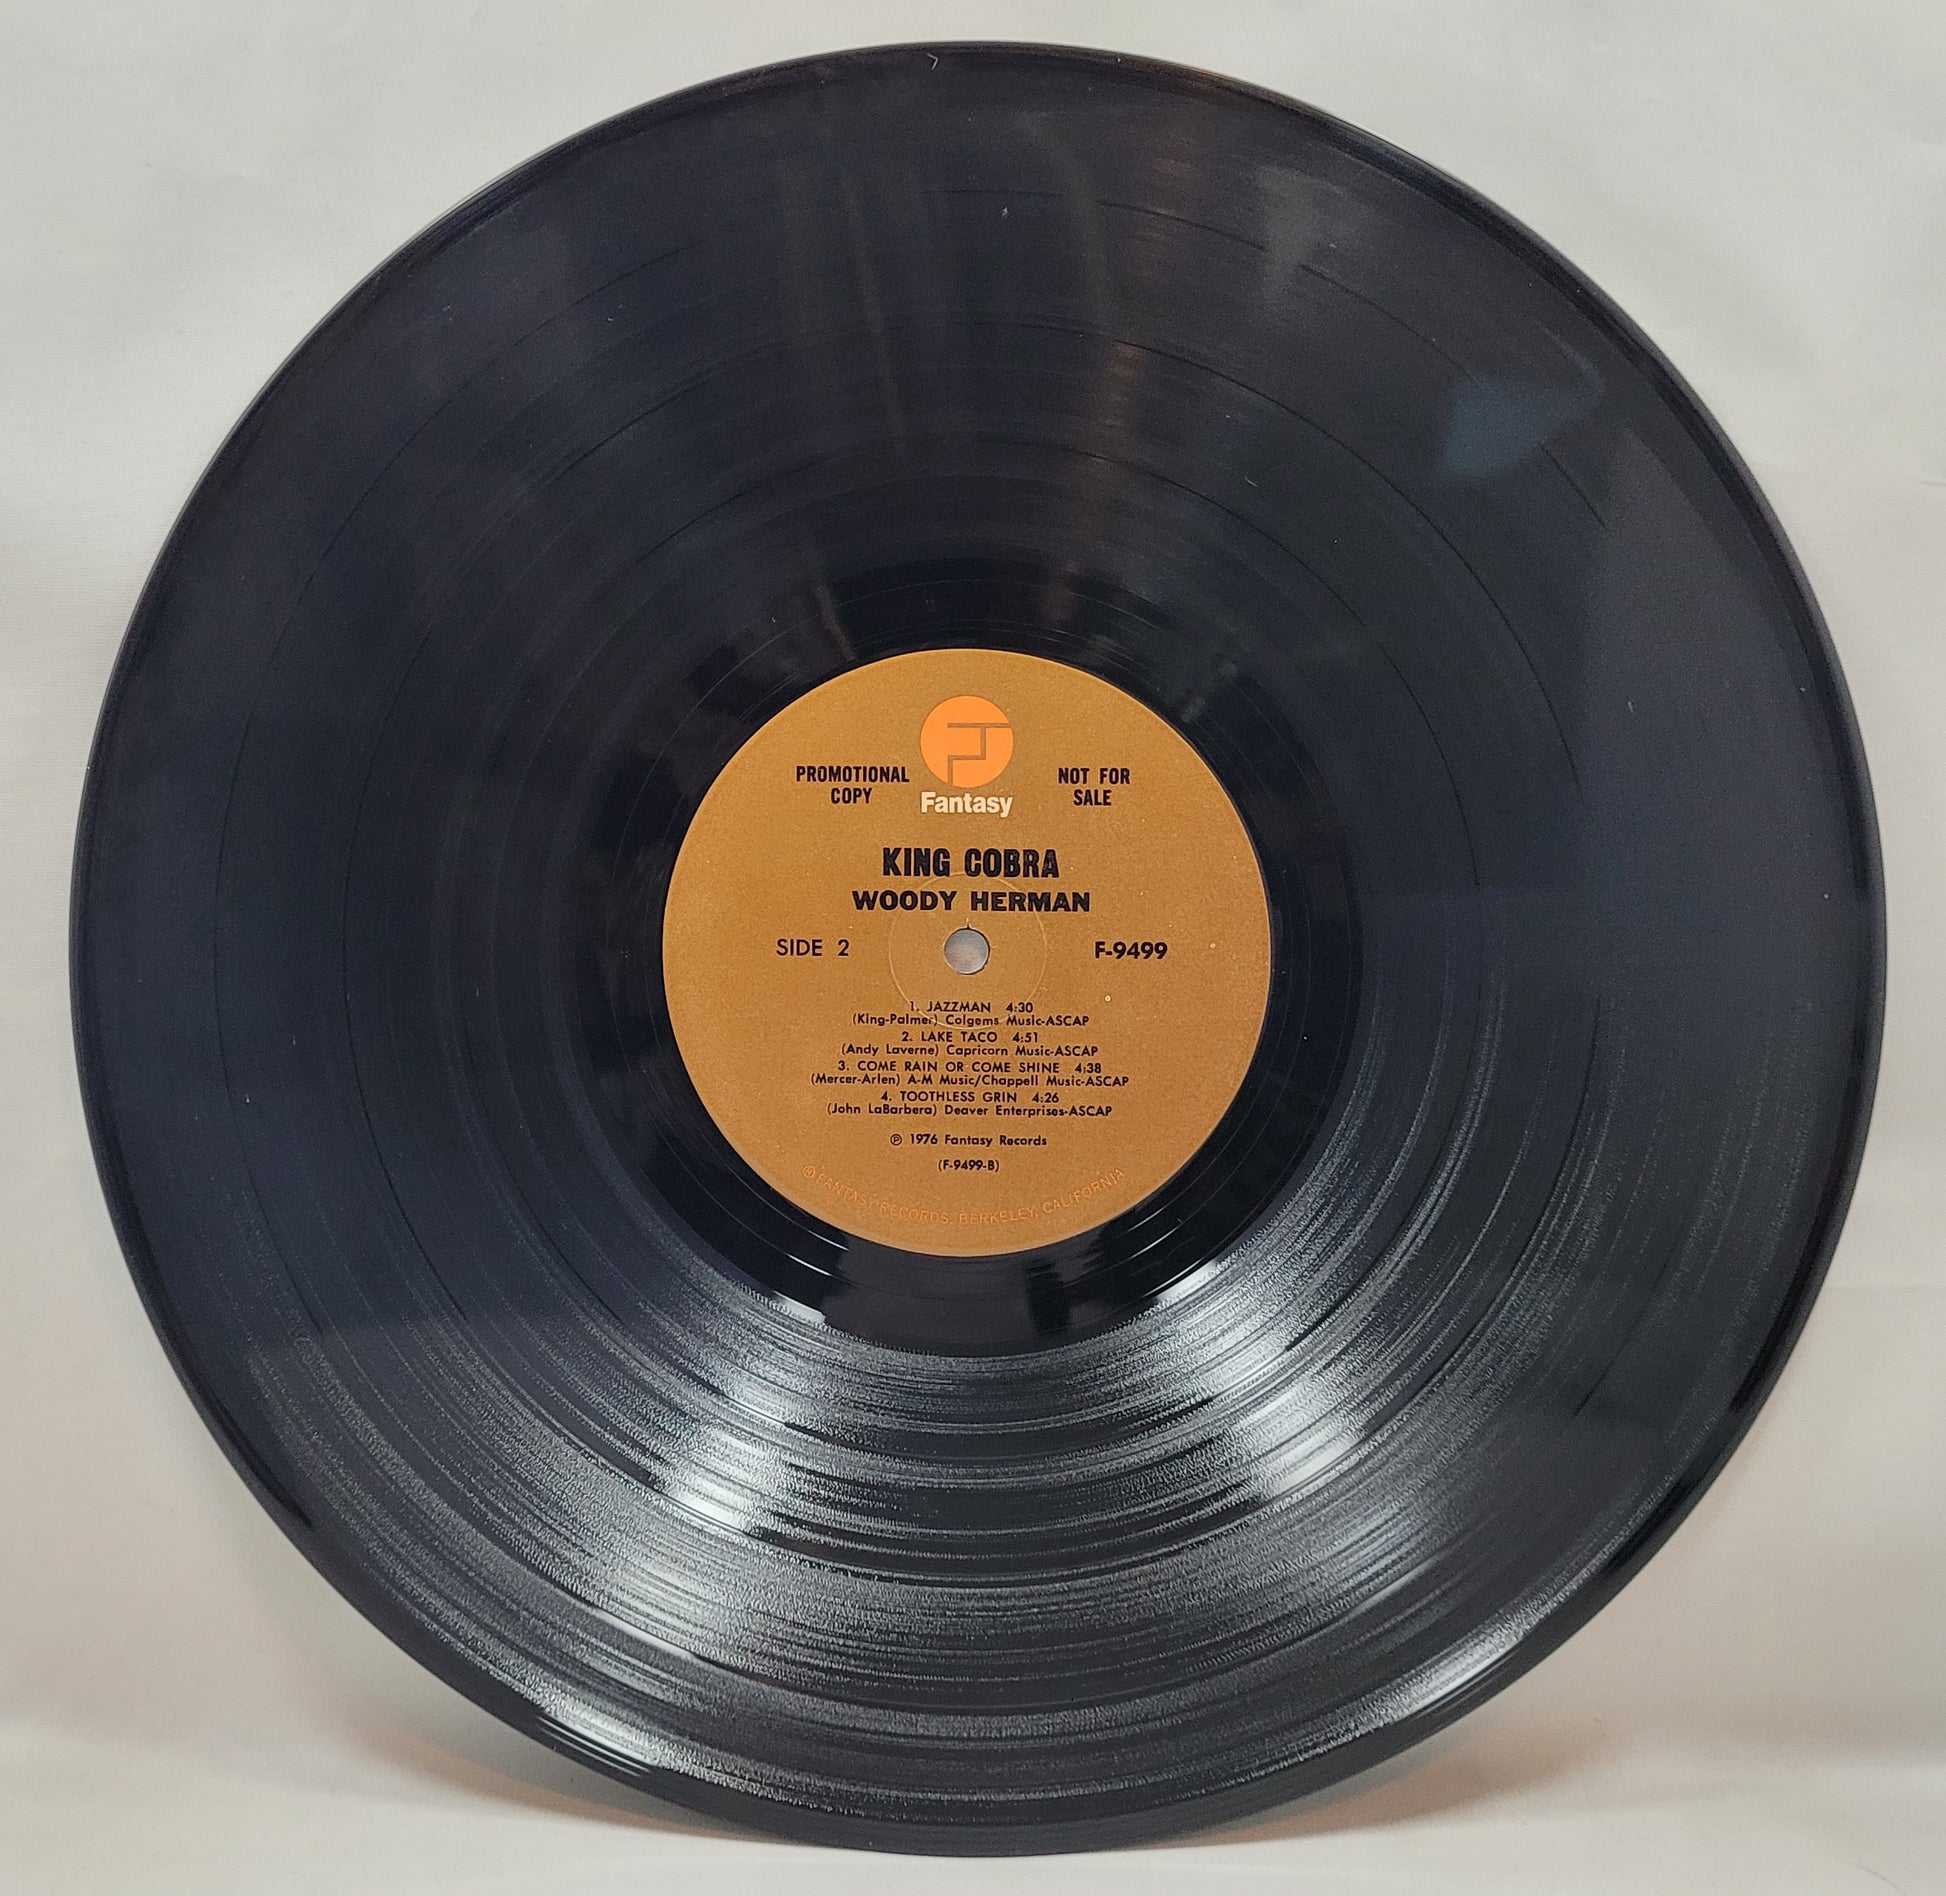 Woody Herman and The Thundering Herd - King Cobra [1976 Promo] [Used Vinyl Record LP]